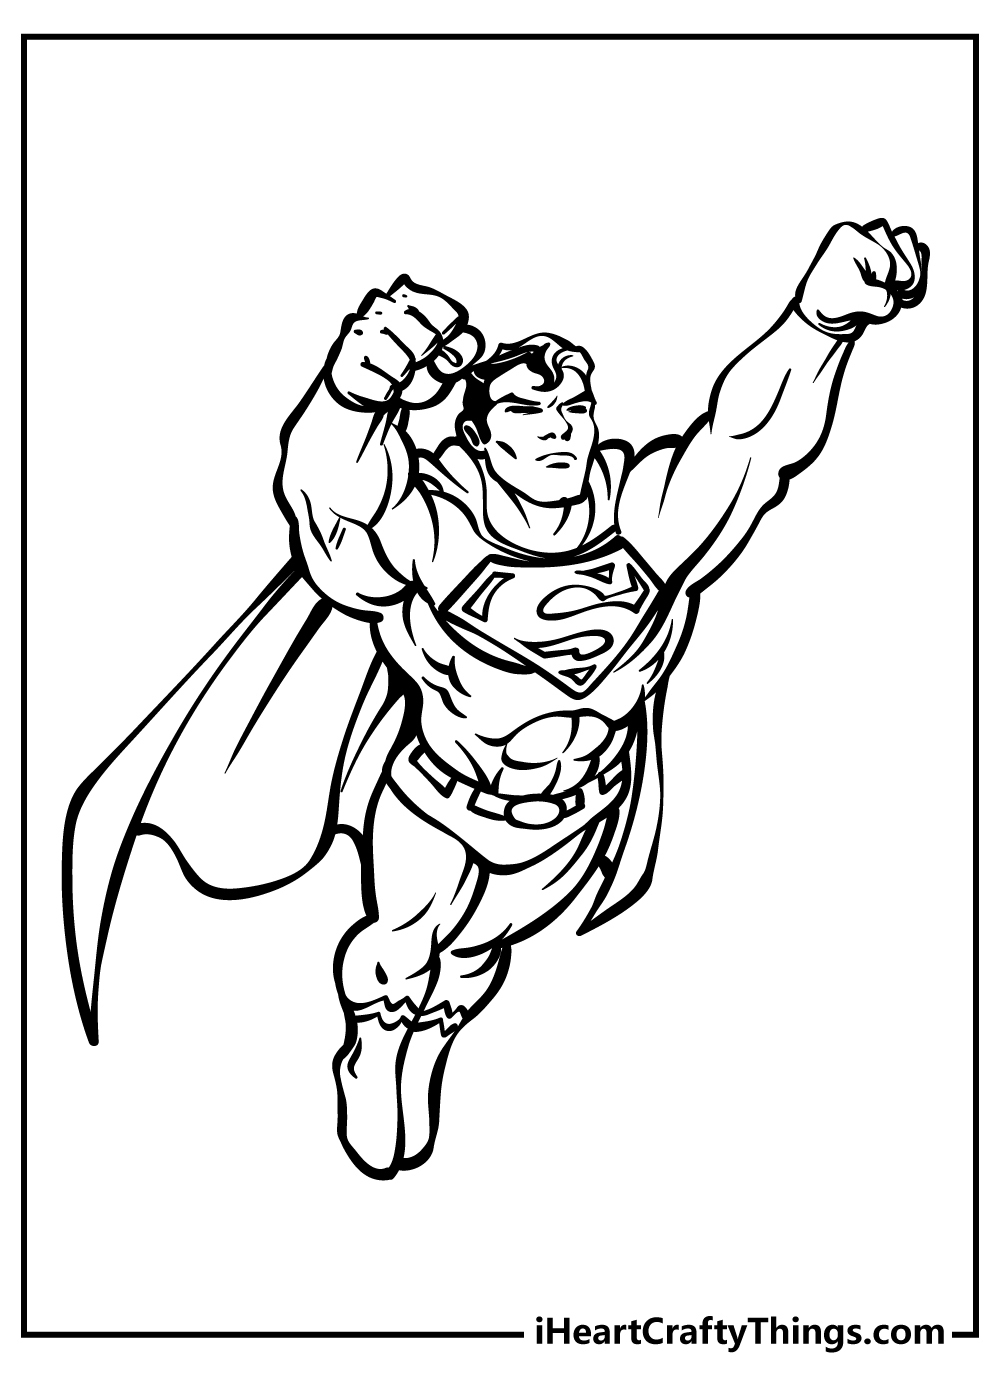 Superhero Coloring Pages (100% Free Printables) - Free Printable Superhero Images